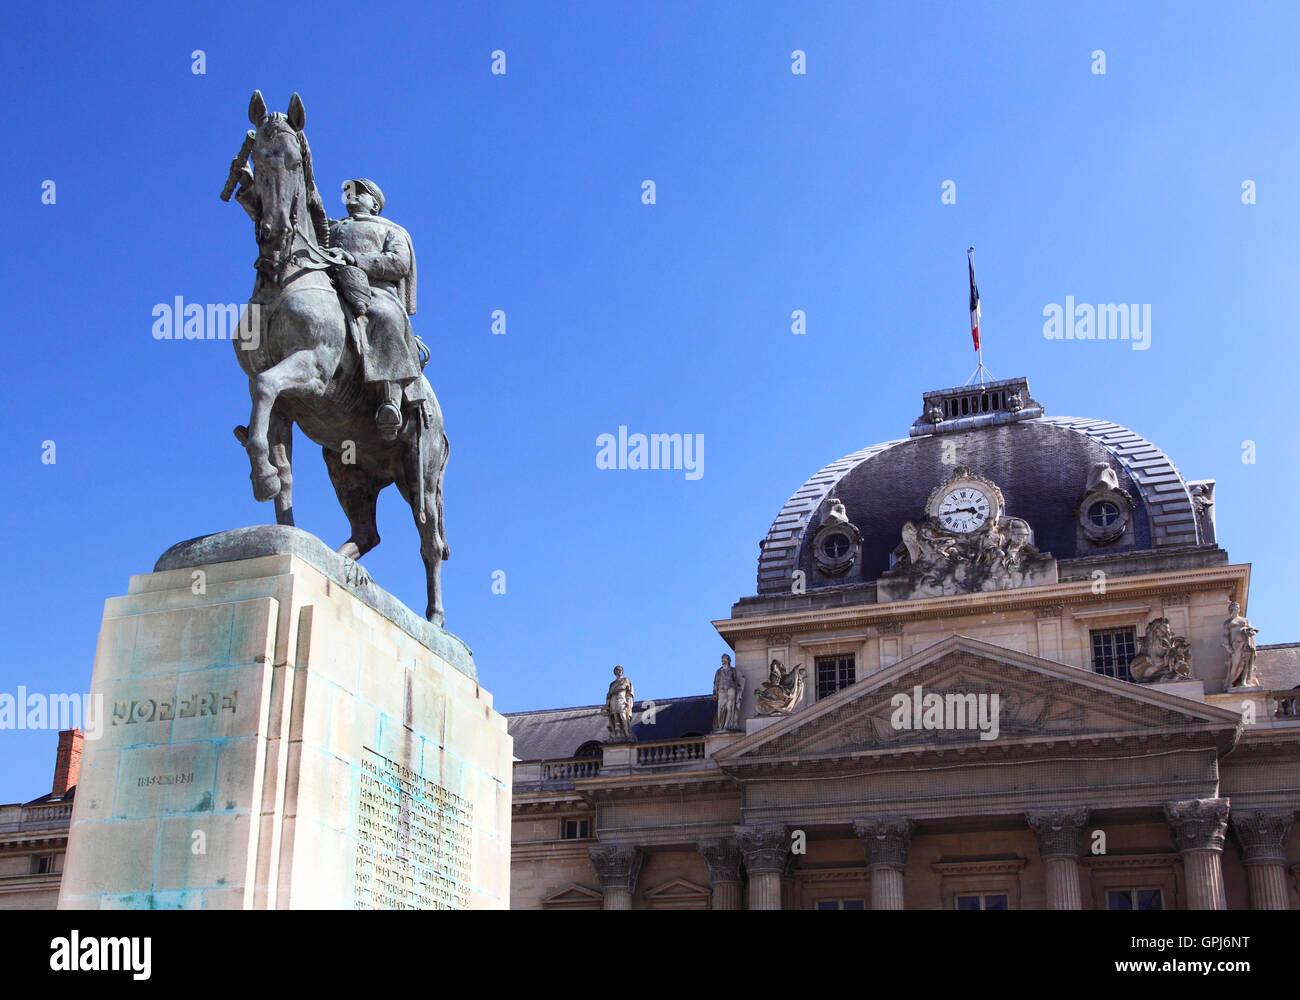 An statue of Joseph Joffre infront of the Ecole Militaire, Place Joffre, Paris, France, Europe Stock Photo